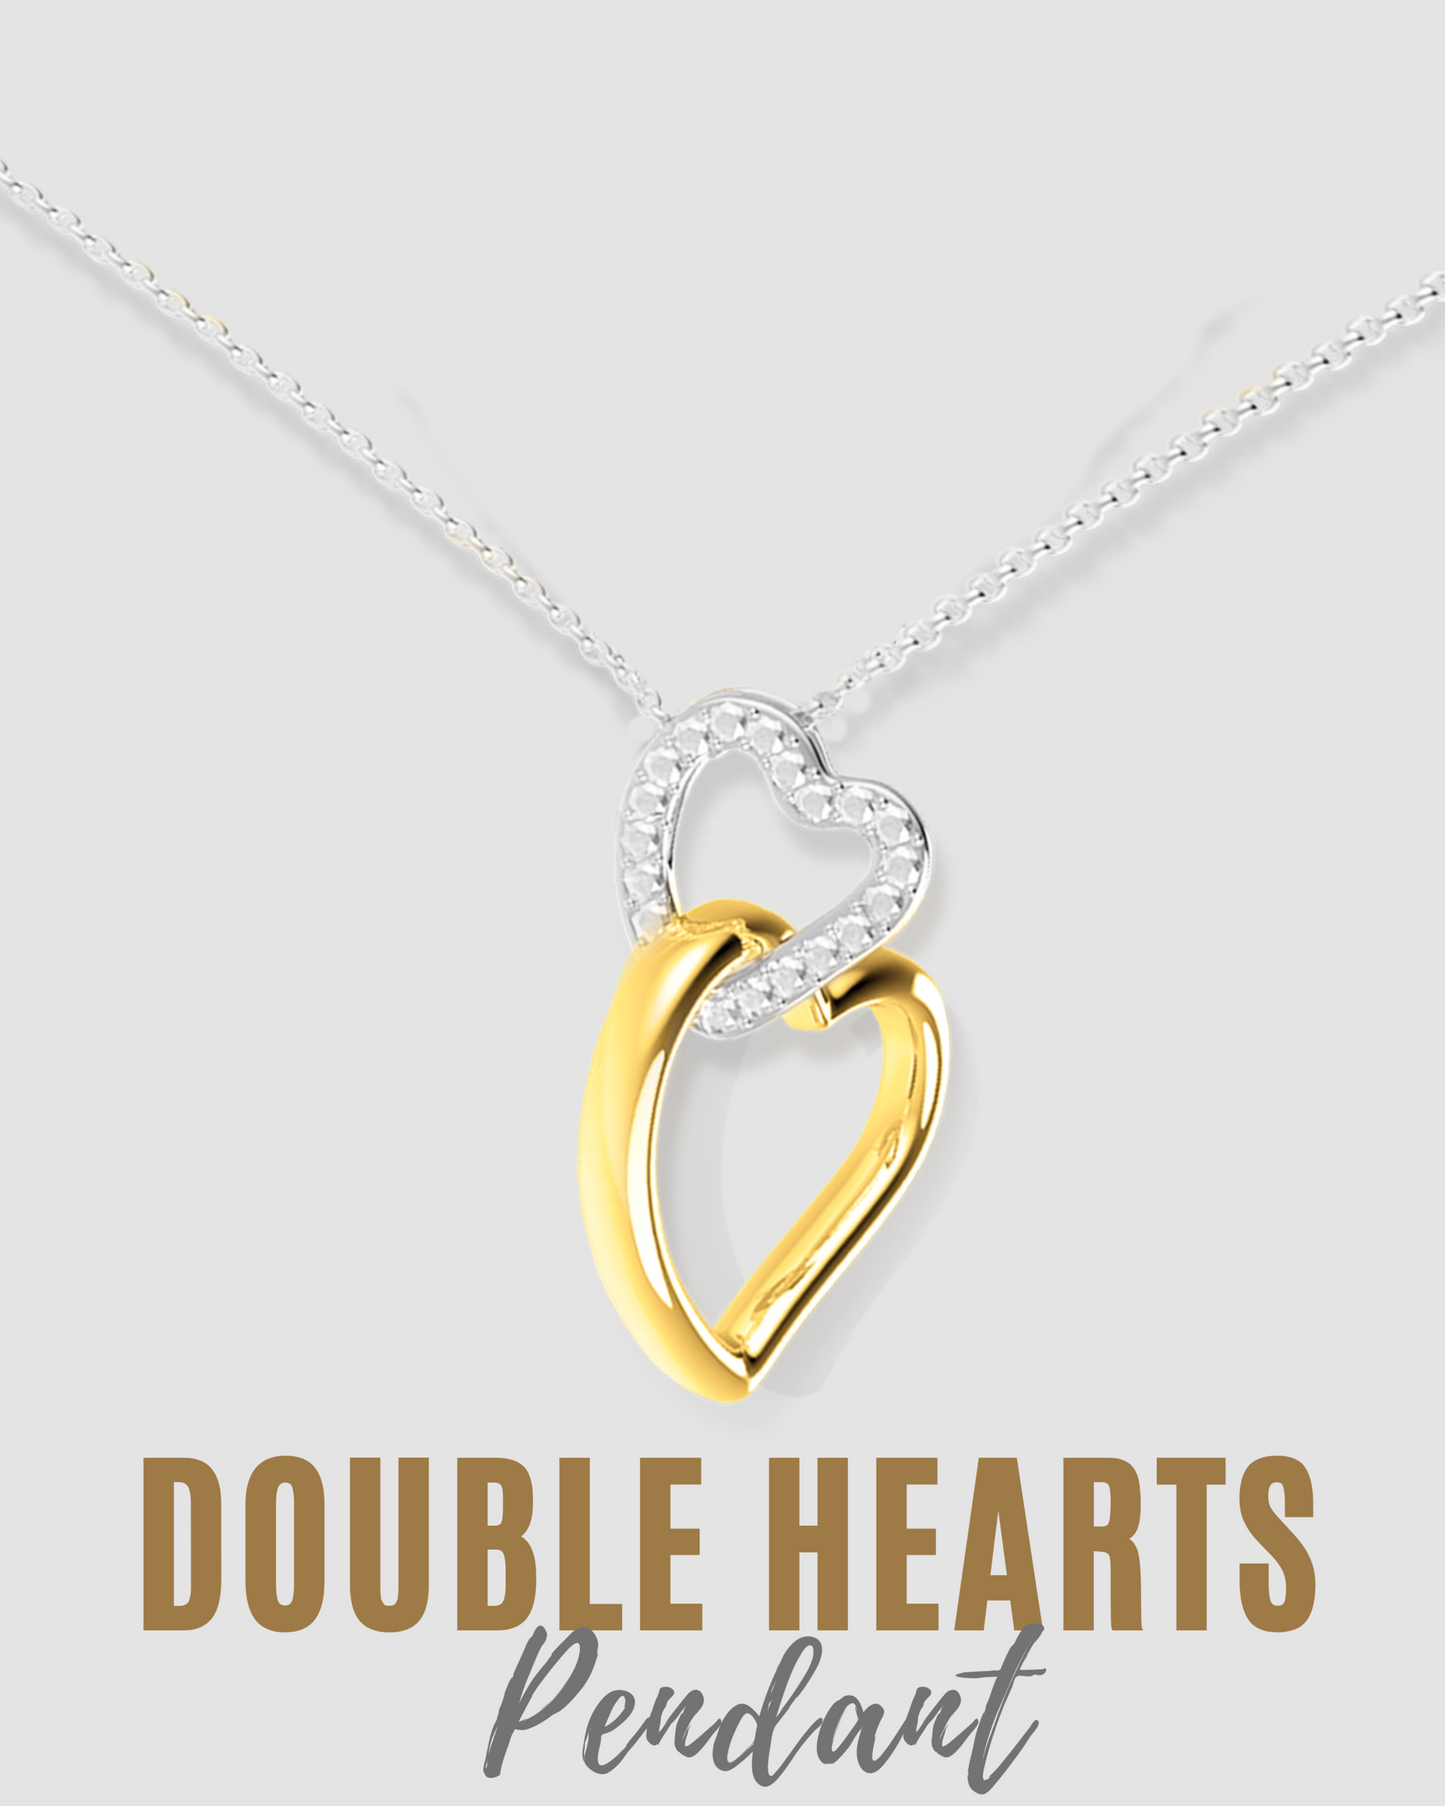 Double Hearts Pendant